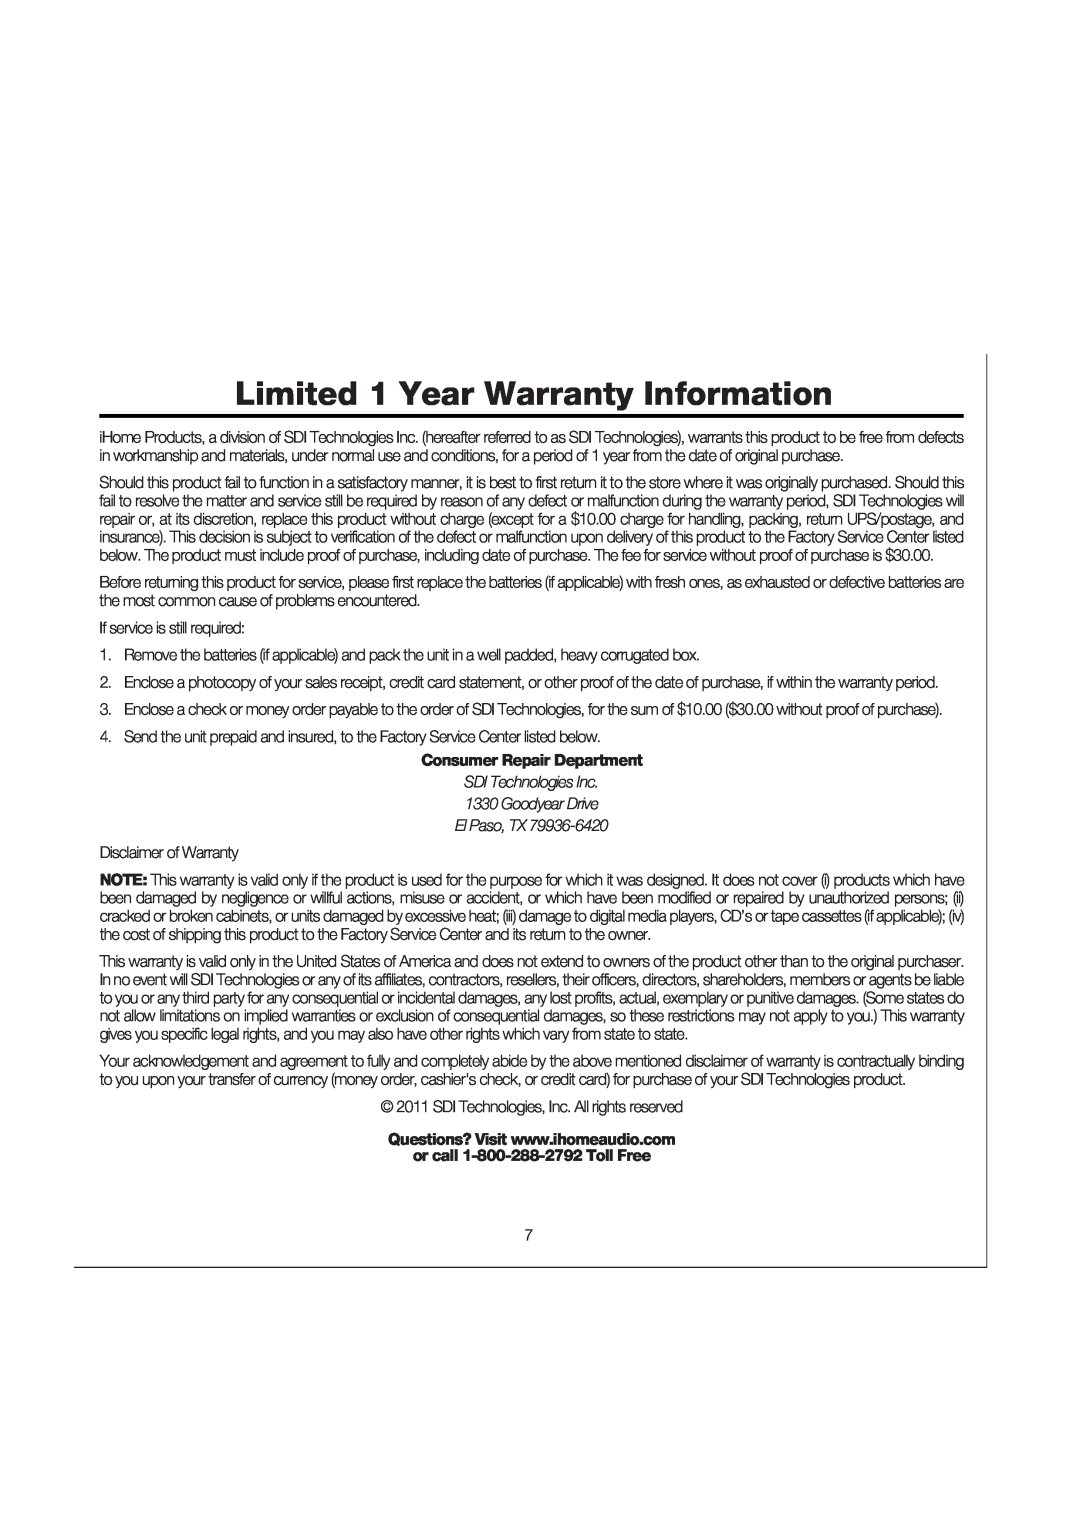 iHome IP57 manual Limited 1 Year Warranty Information, Consumer Repair Department, SDI Technologies Inc 1330 Goodyear Drive 